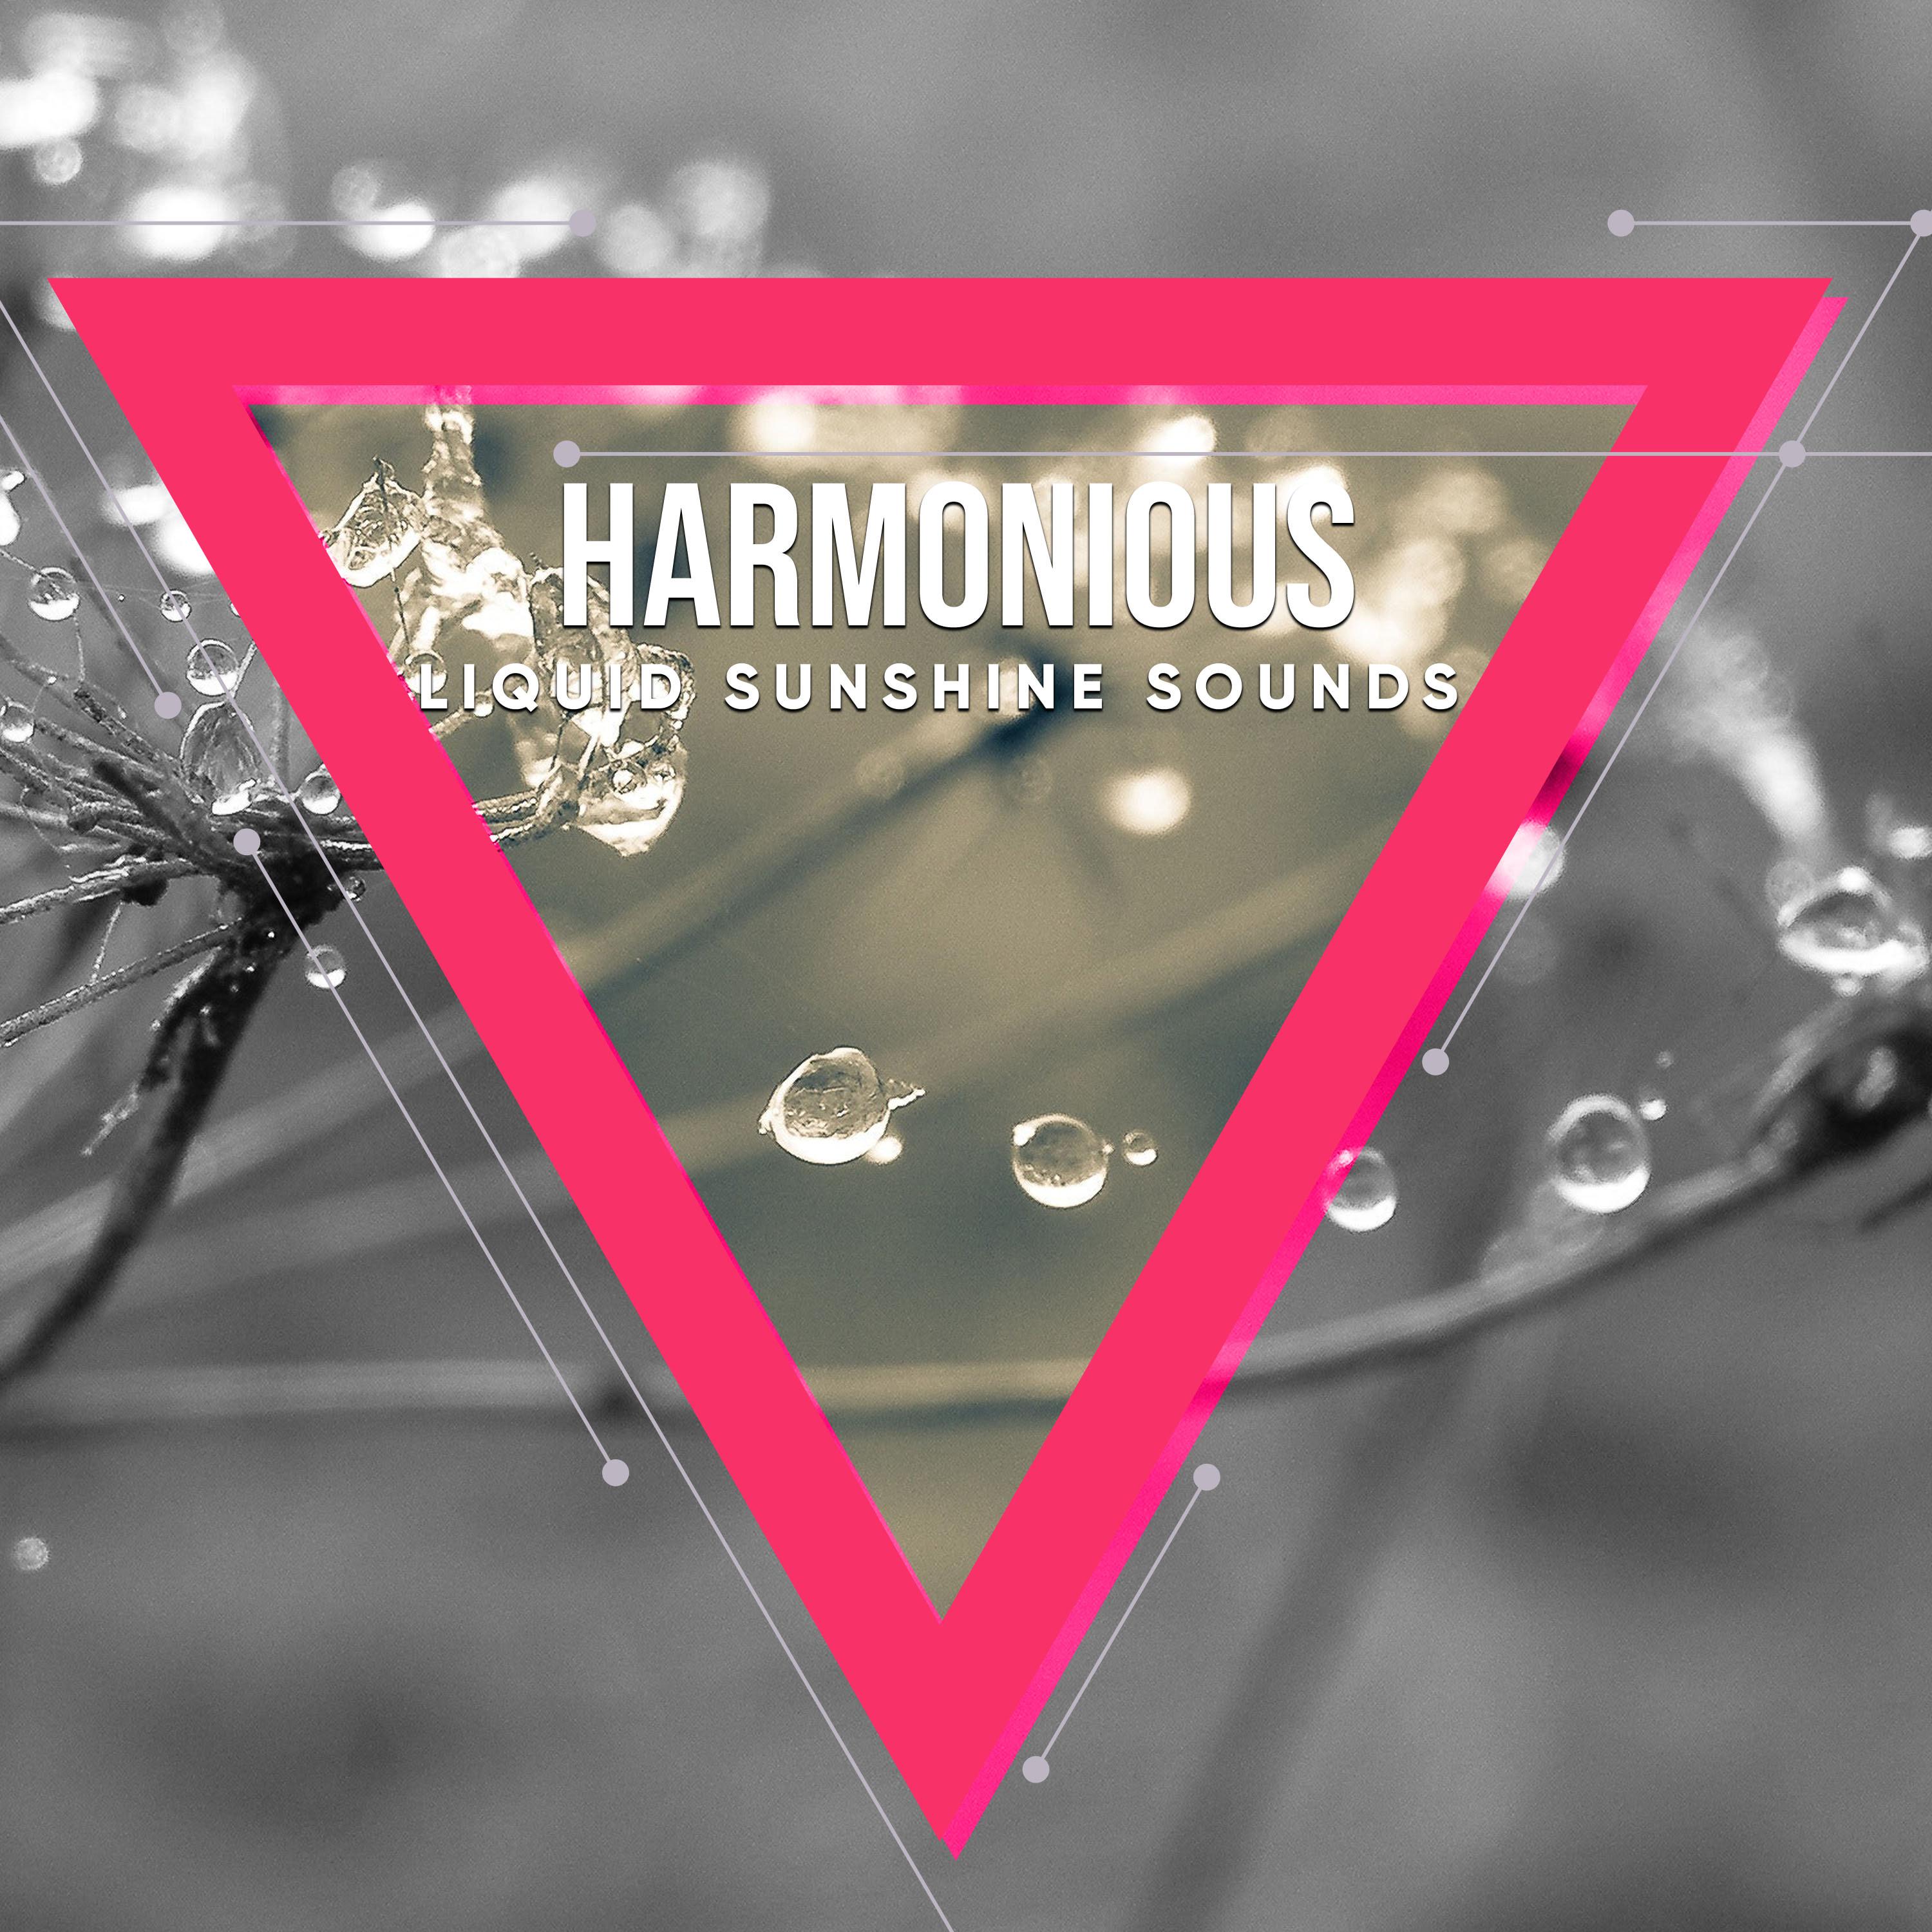 #14 Harmonious Liquid Sunshine Sounds for Spa and Meditation